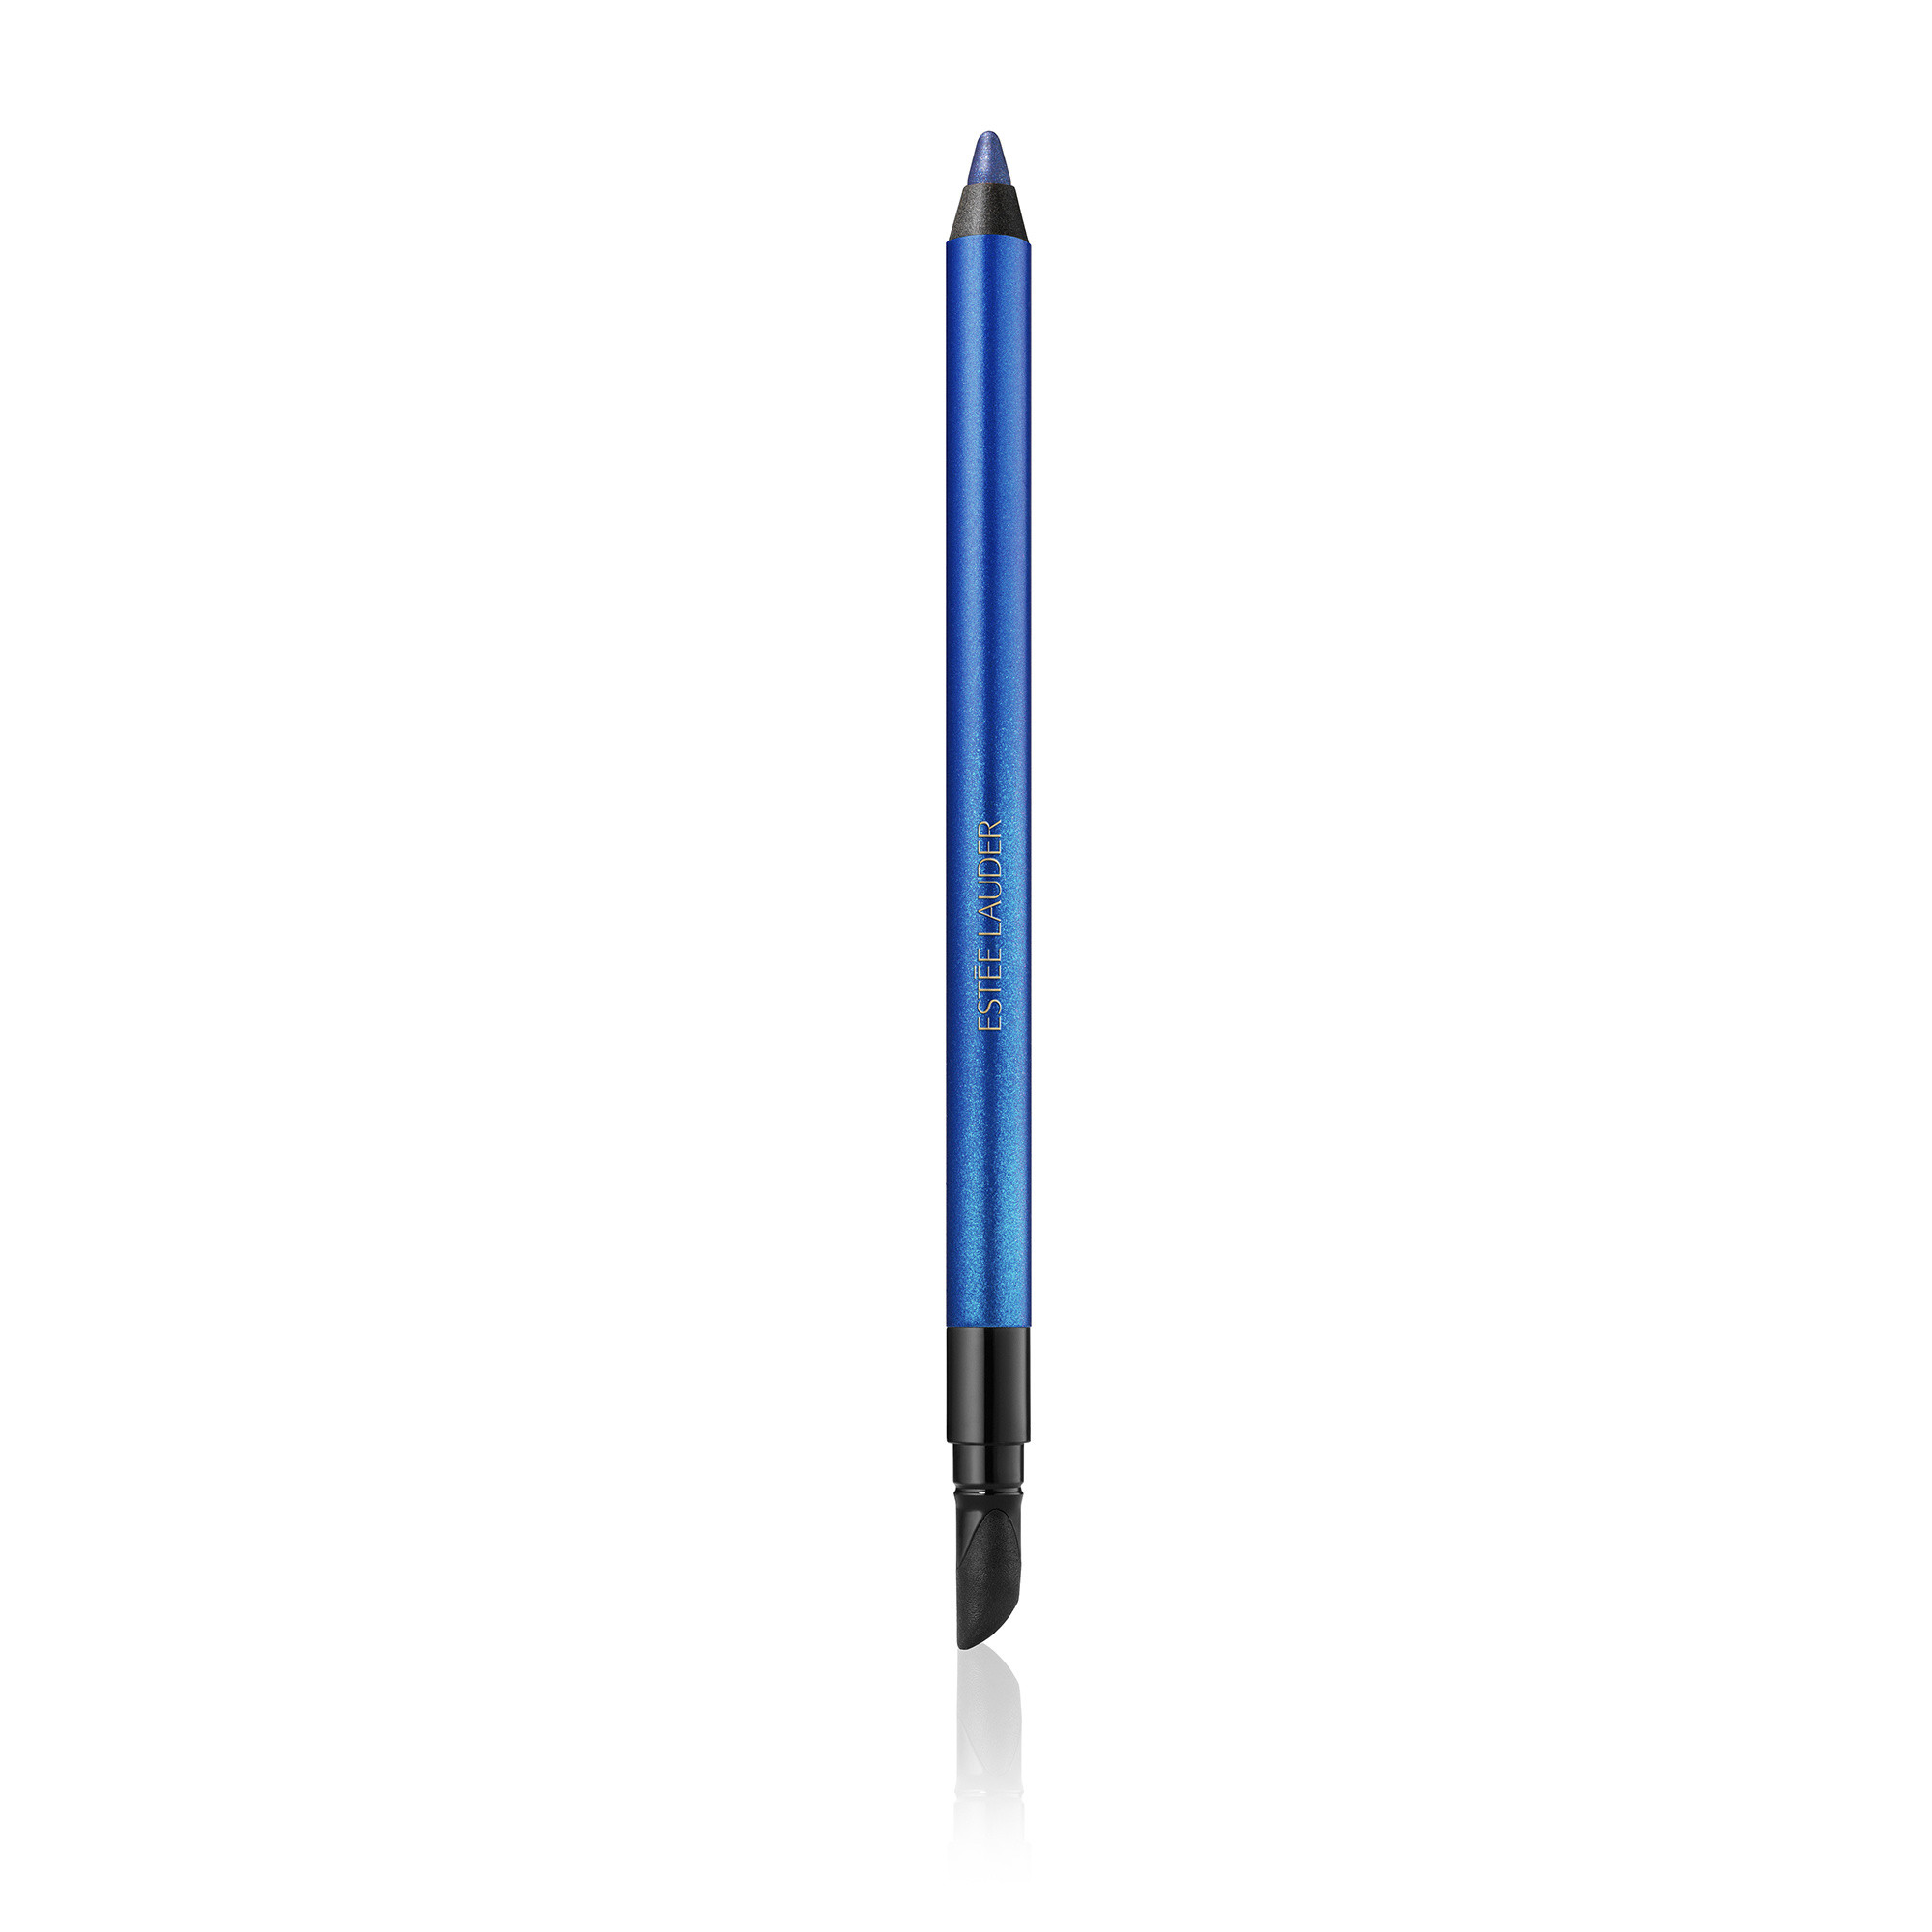 Double wear 24h waterproof gel eye pencil - 06 Sapphire, Turquoise, large image number 0